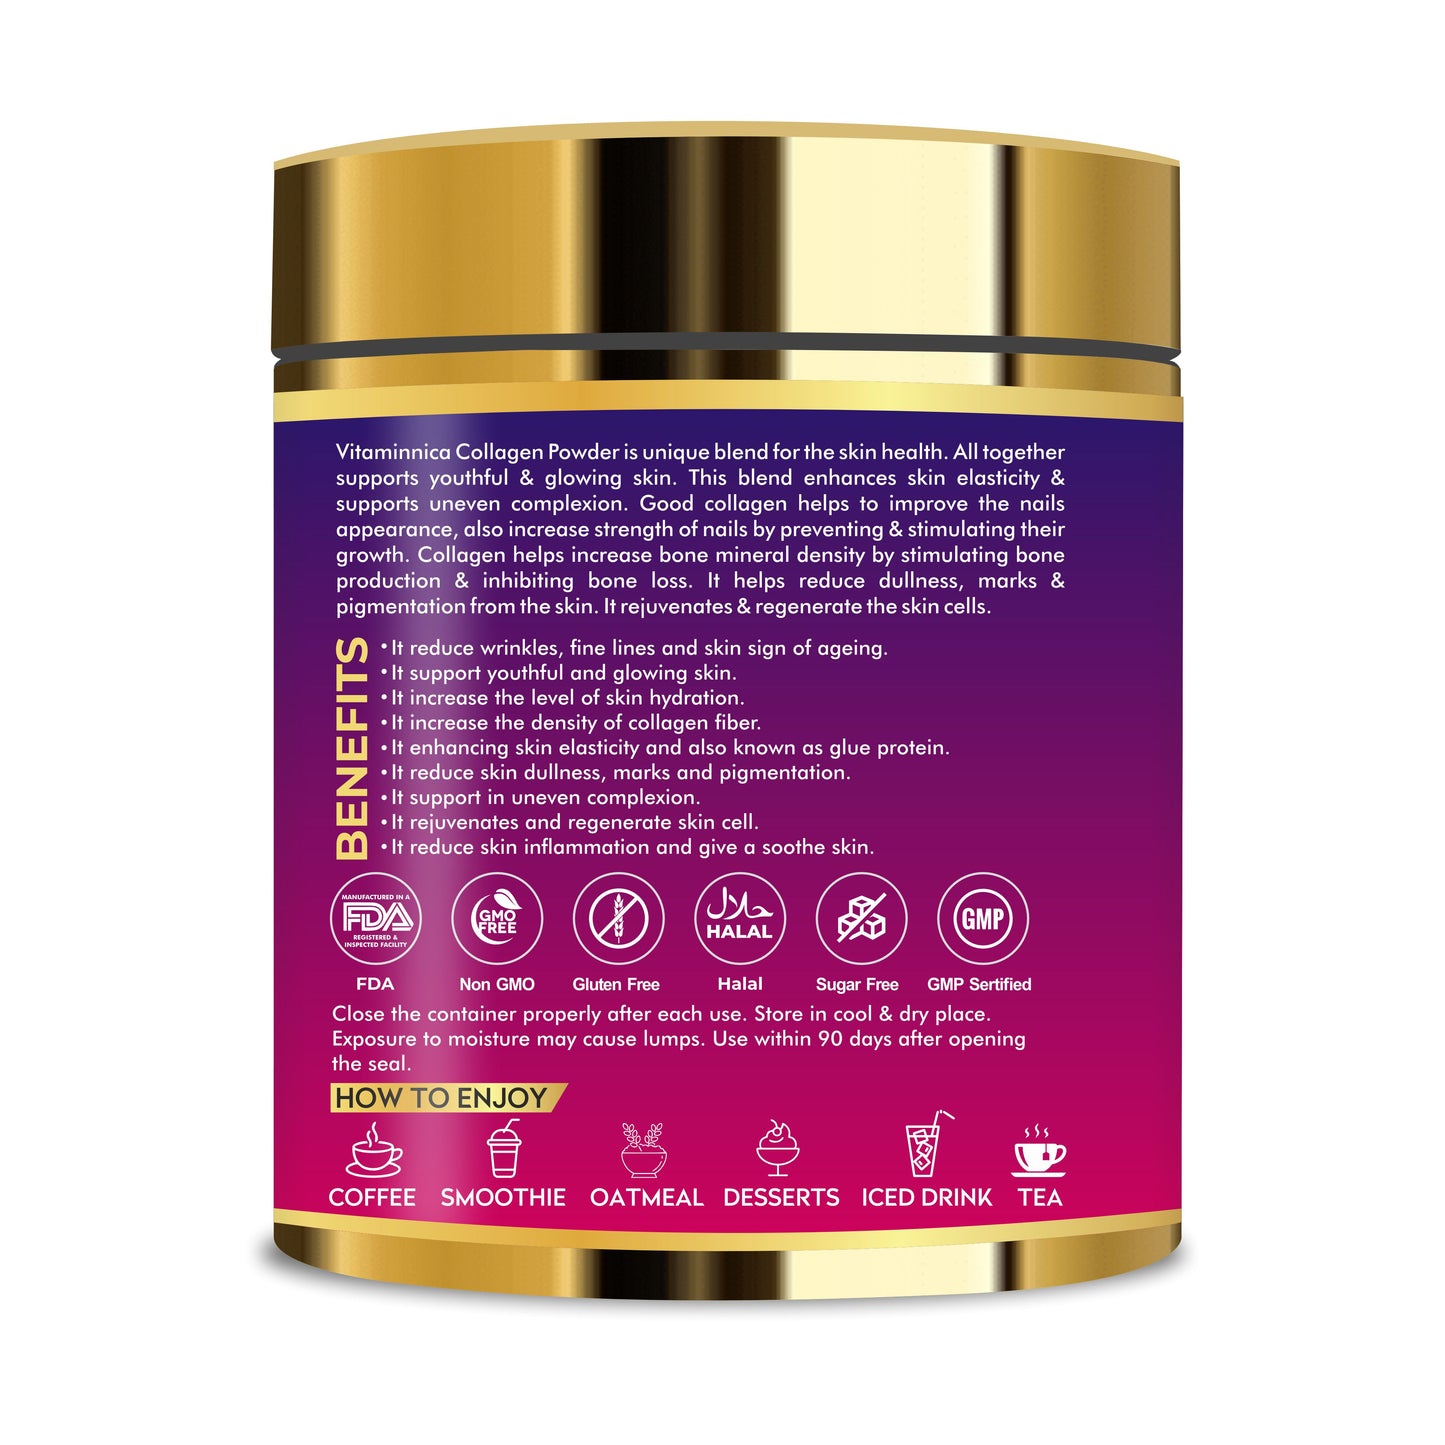 Vitaminnica Vita Beauty Collagen Powder- MixBerry Flavour | Vitamin C, Glutathione, Hyaluronic Acid, Biotin 180g-30 servings - Vitaminnica Healthcare